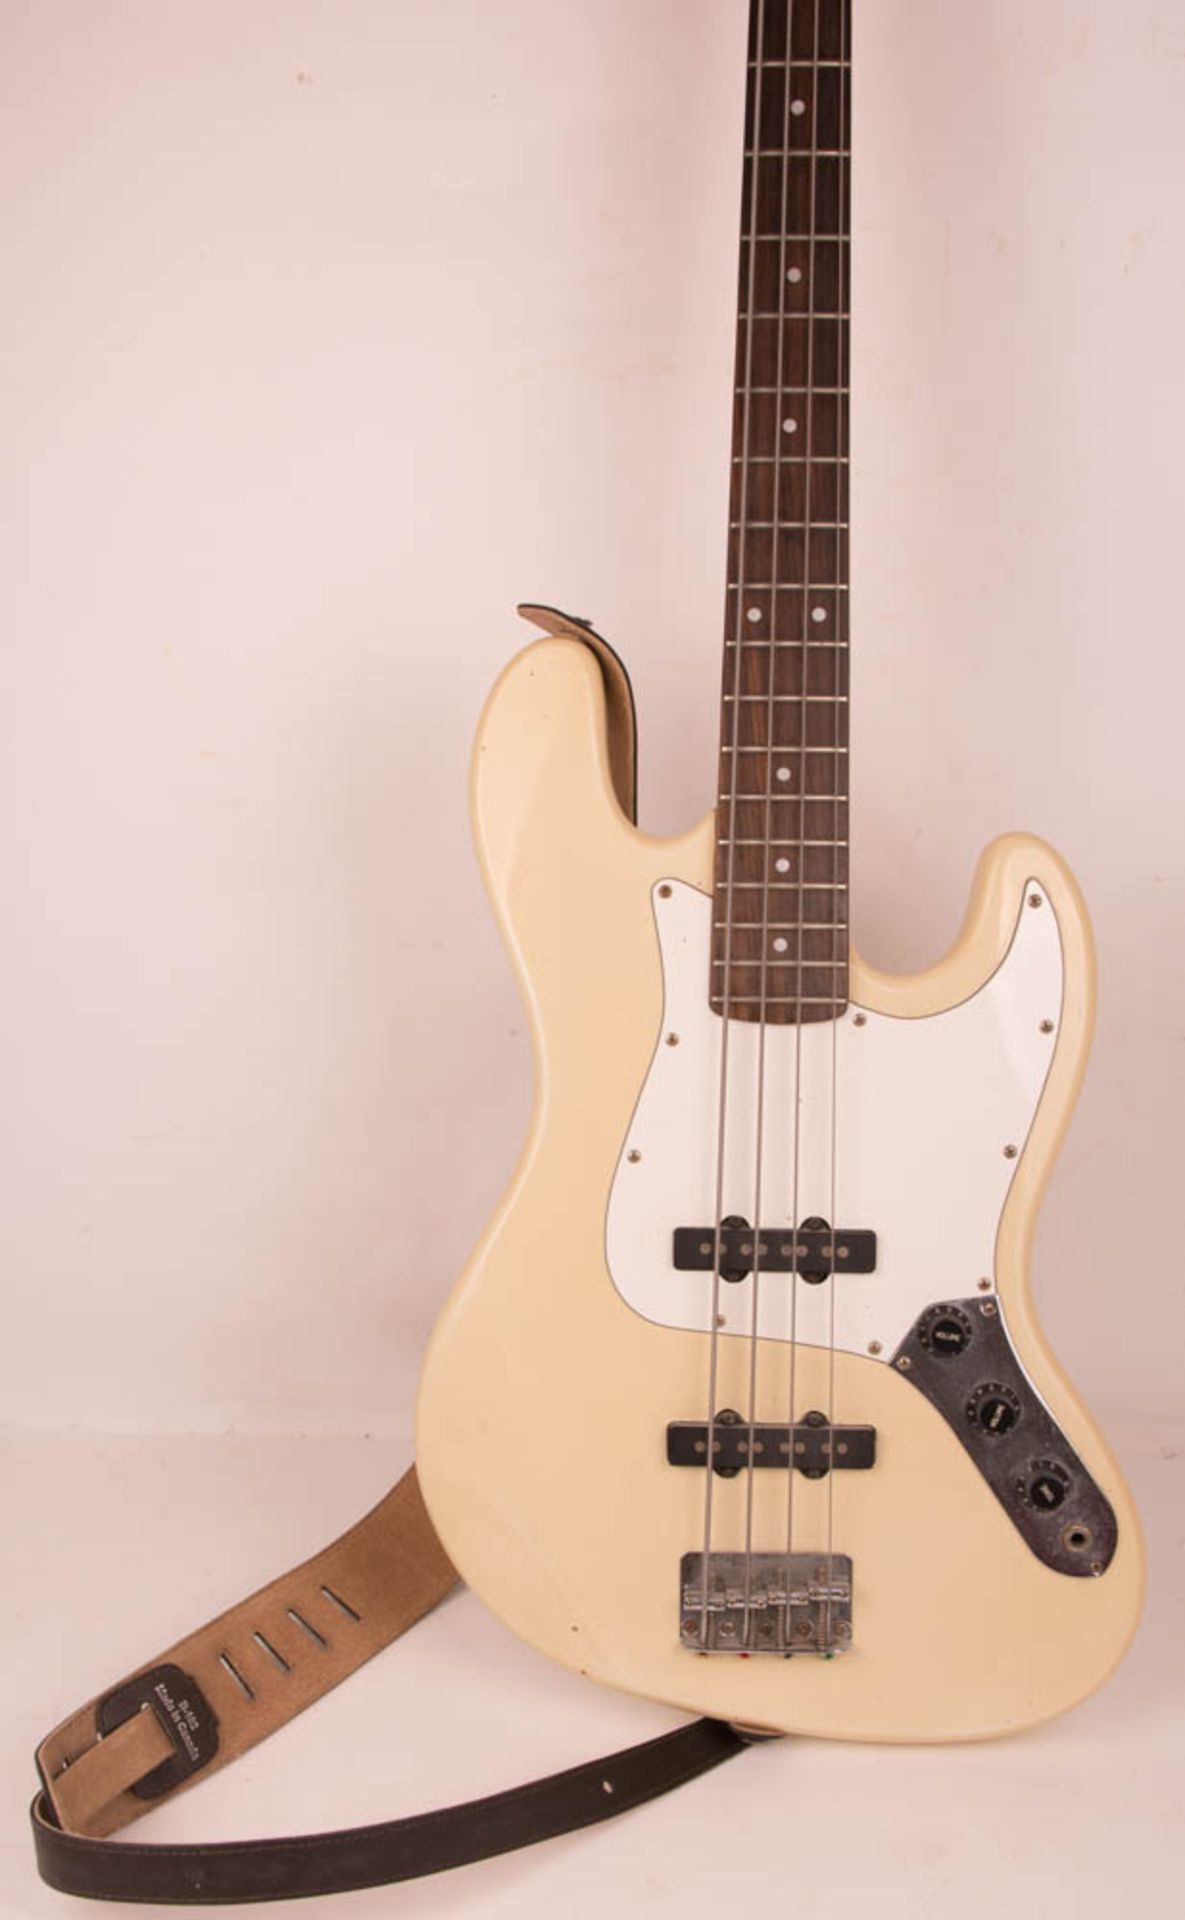 Fender Squier Jazz Bass, White, Korea.